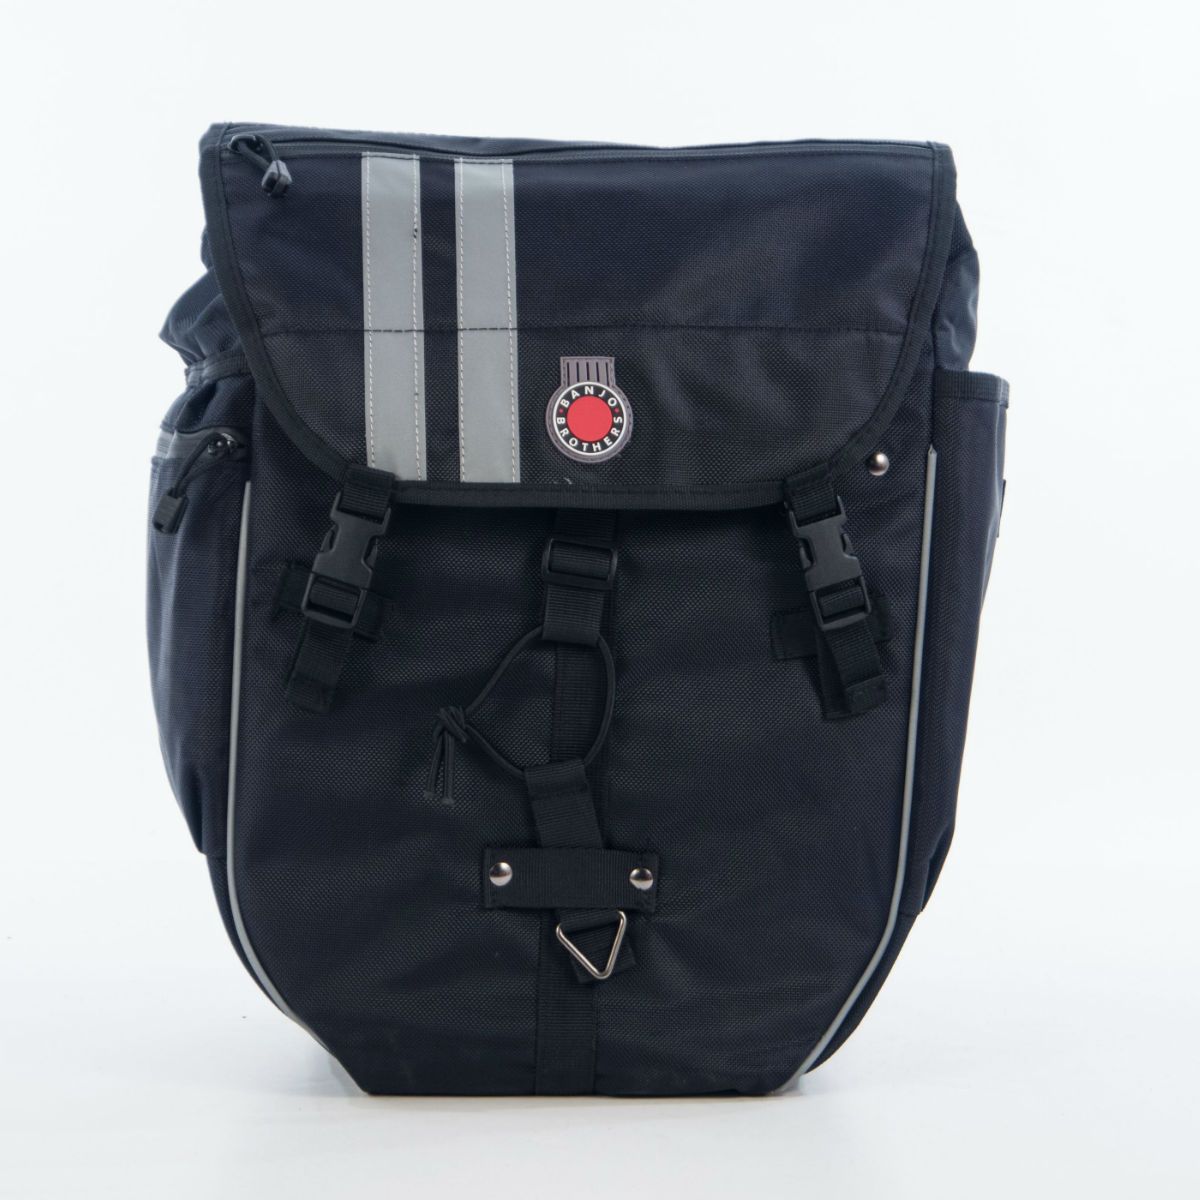 Backpack Pannier, Waterproof, For Commuters